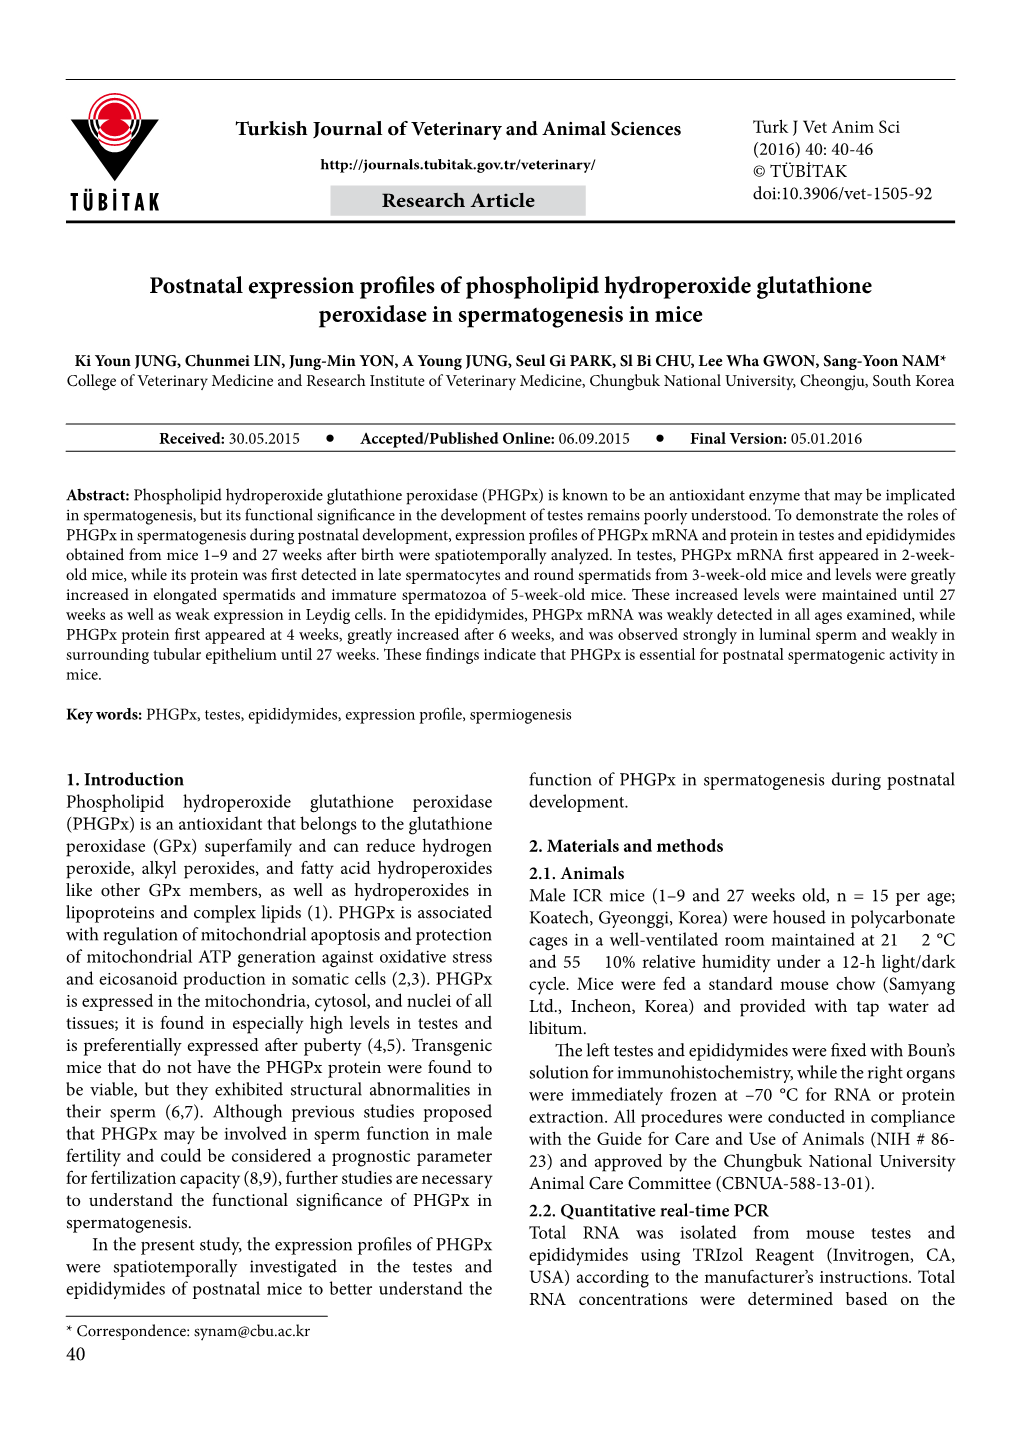 Postnatal Expression Profiles of Phospholipid Hydroperoxide Glutathione Peroxidase in Spermatogenesis in Mice